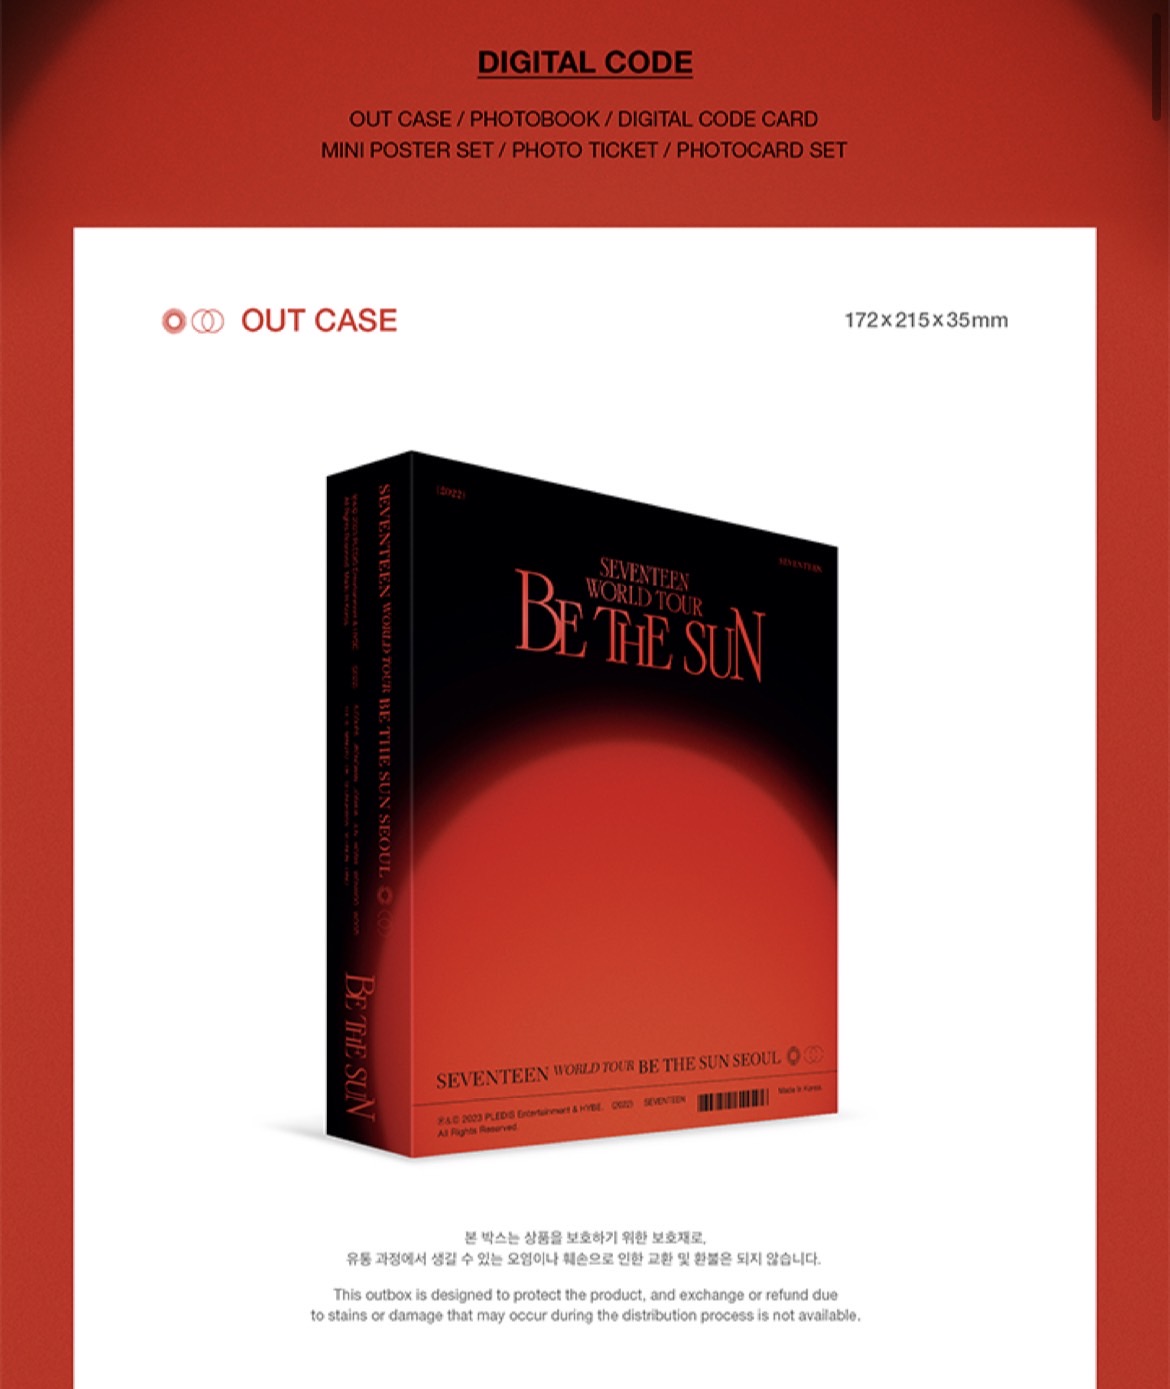 Seventeen World Tour - Be The Sun Seoul (Digital Code version